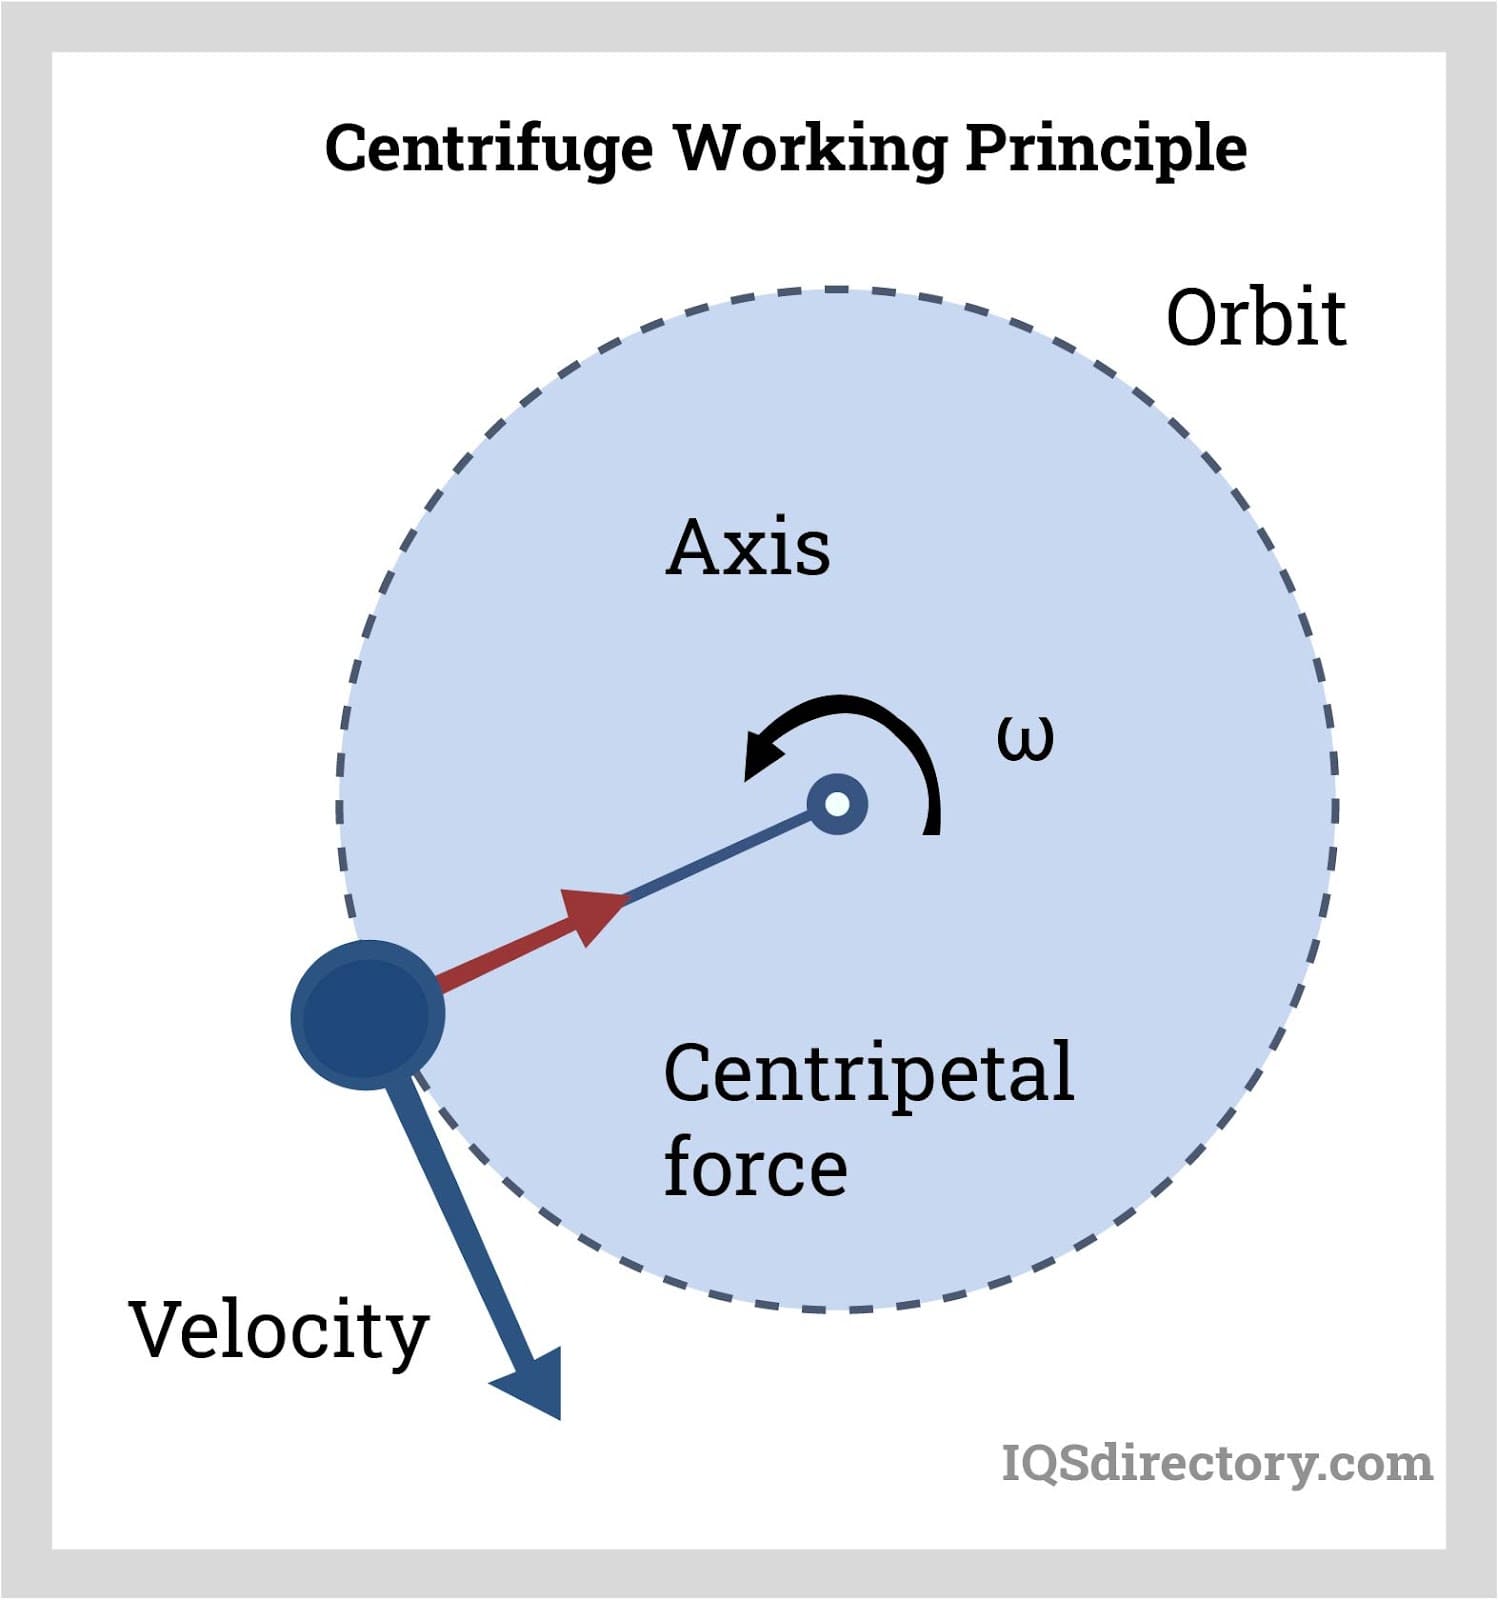 Centrifuge Working Principle